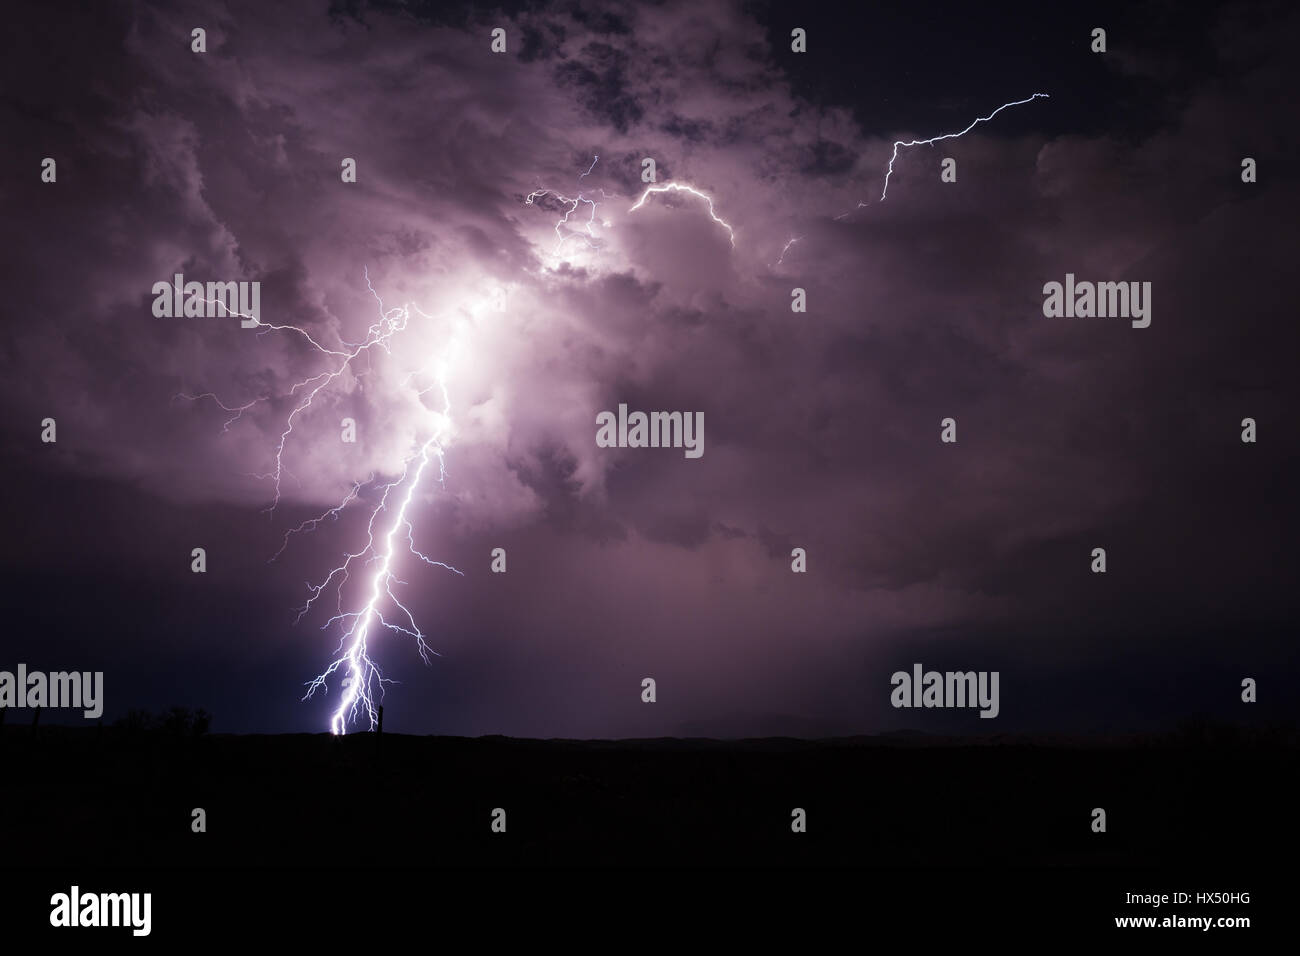 A powerful lightning bolt lights up a storm the night sky Stock Photo